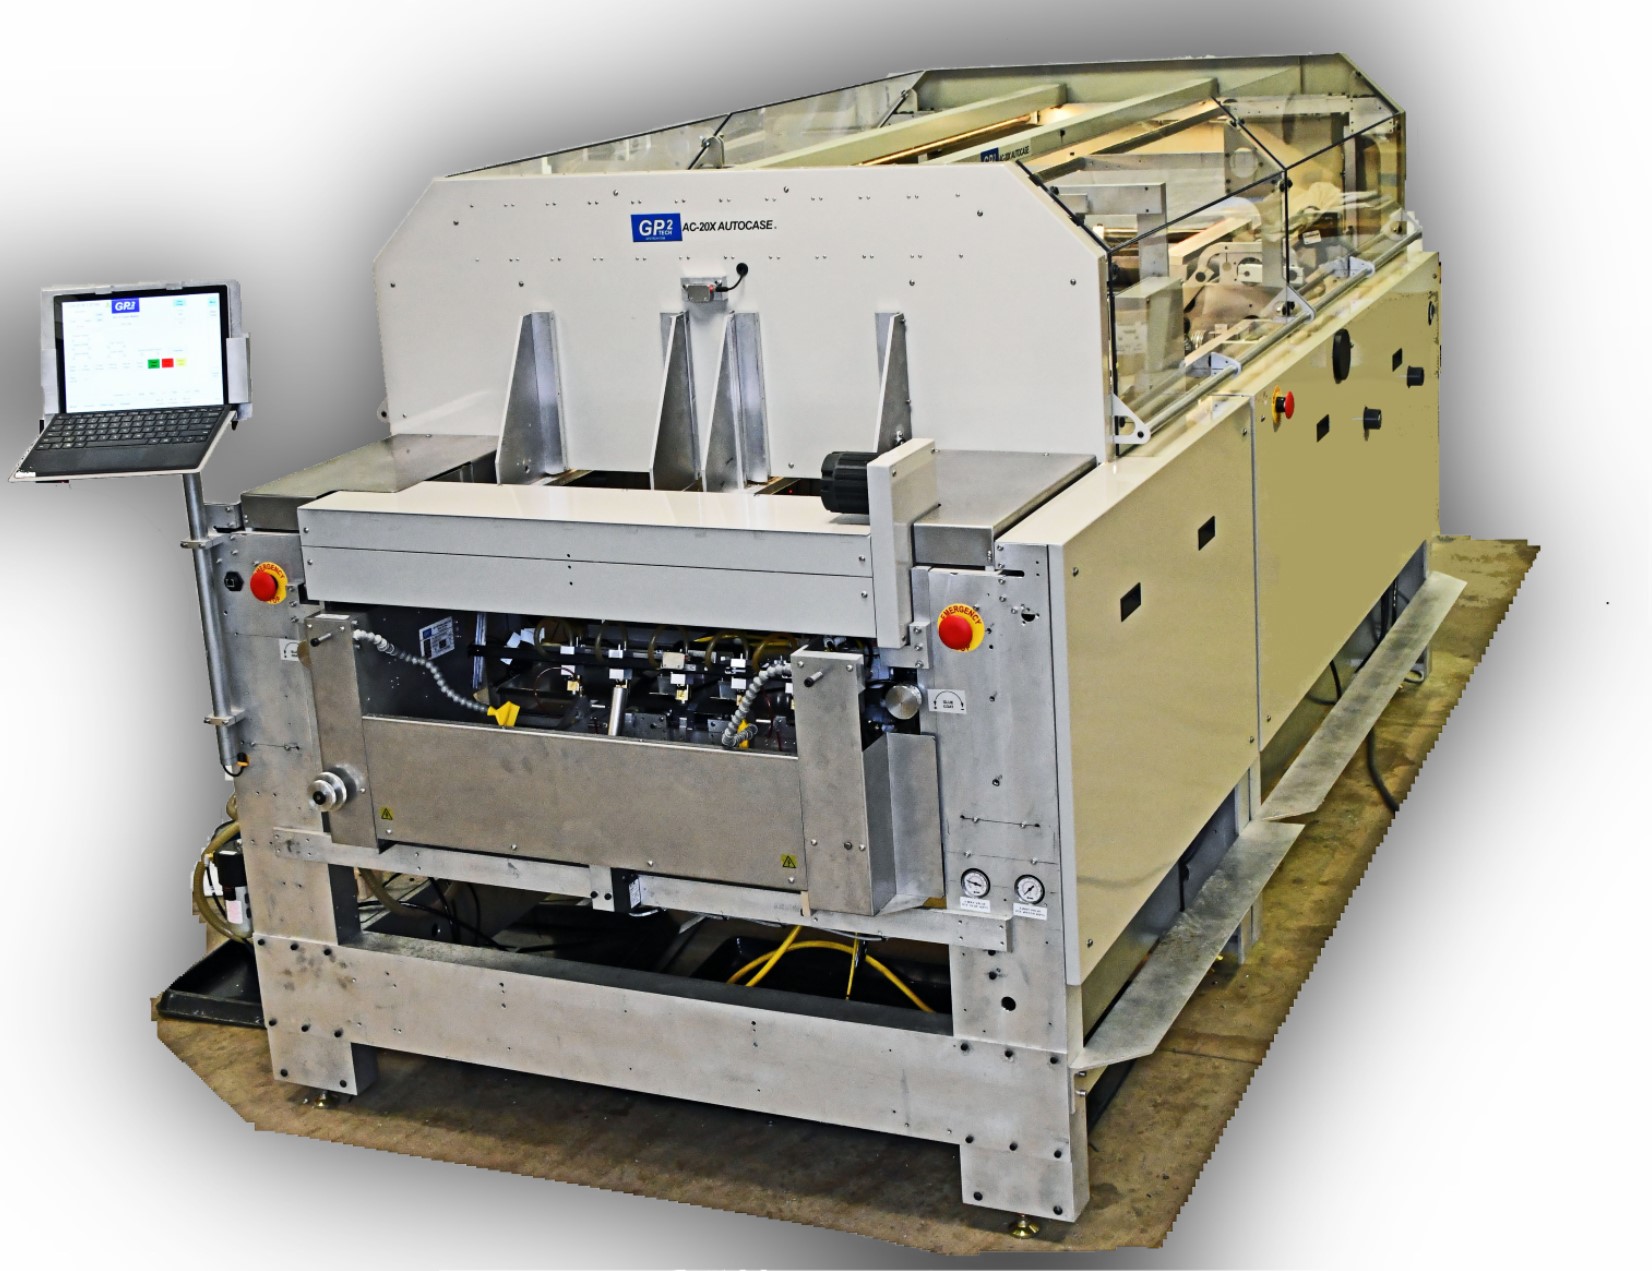 The GP2 Technologies, Inc. AC-20X Casemaker